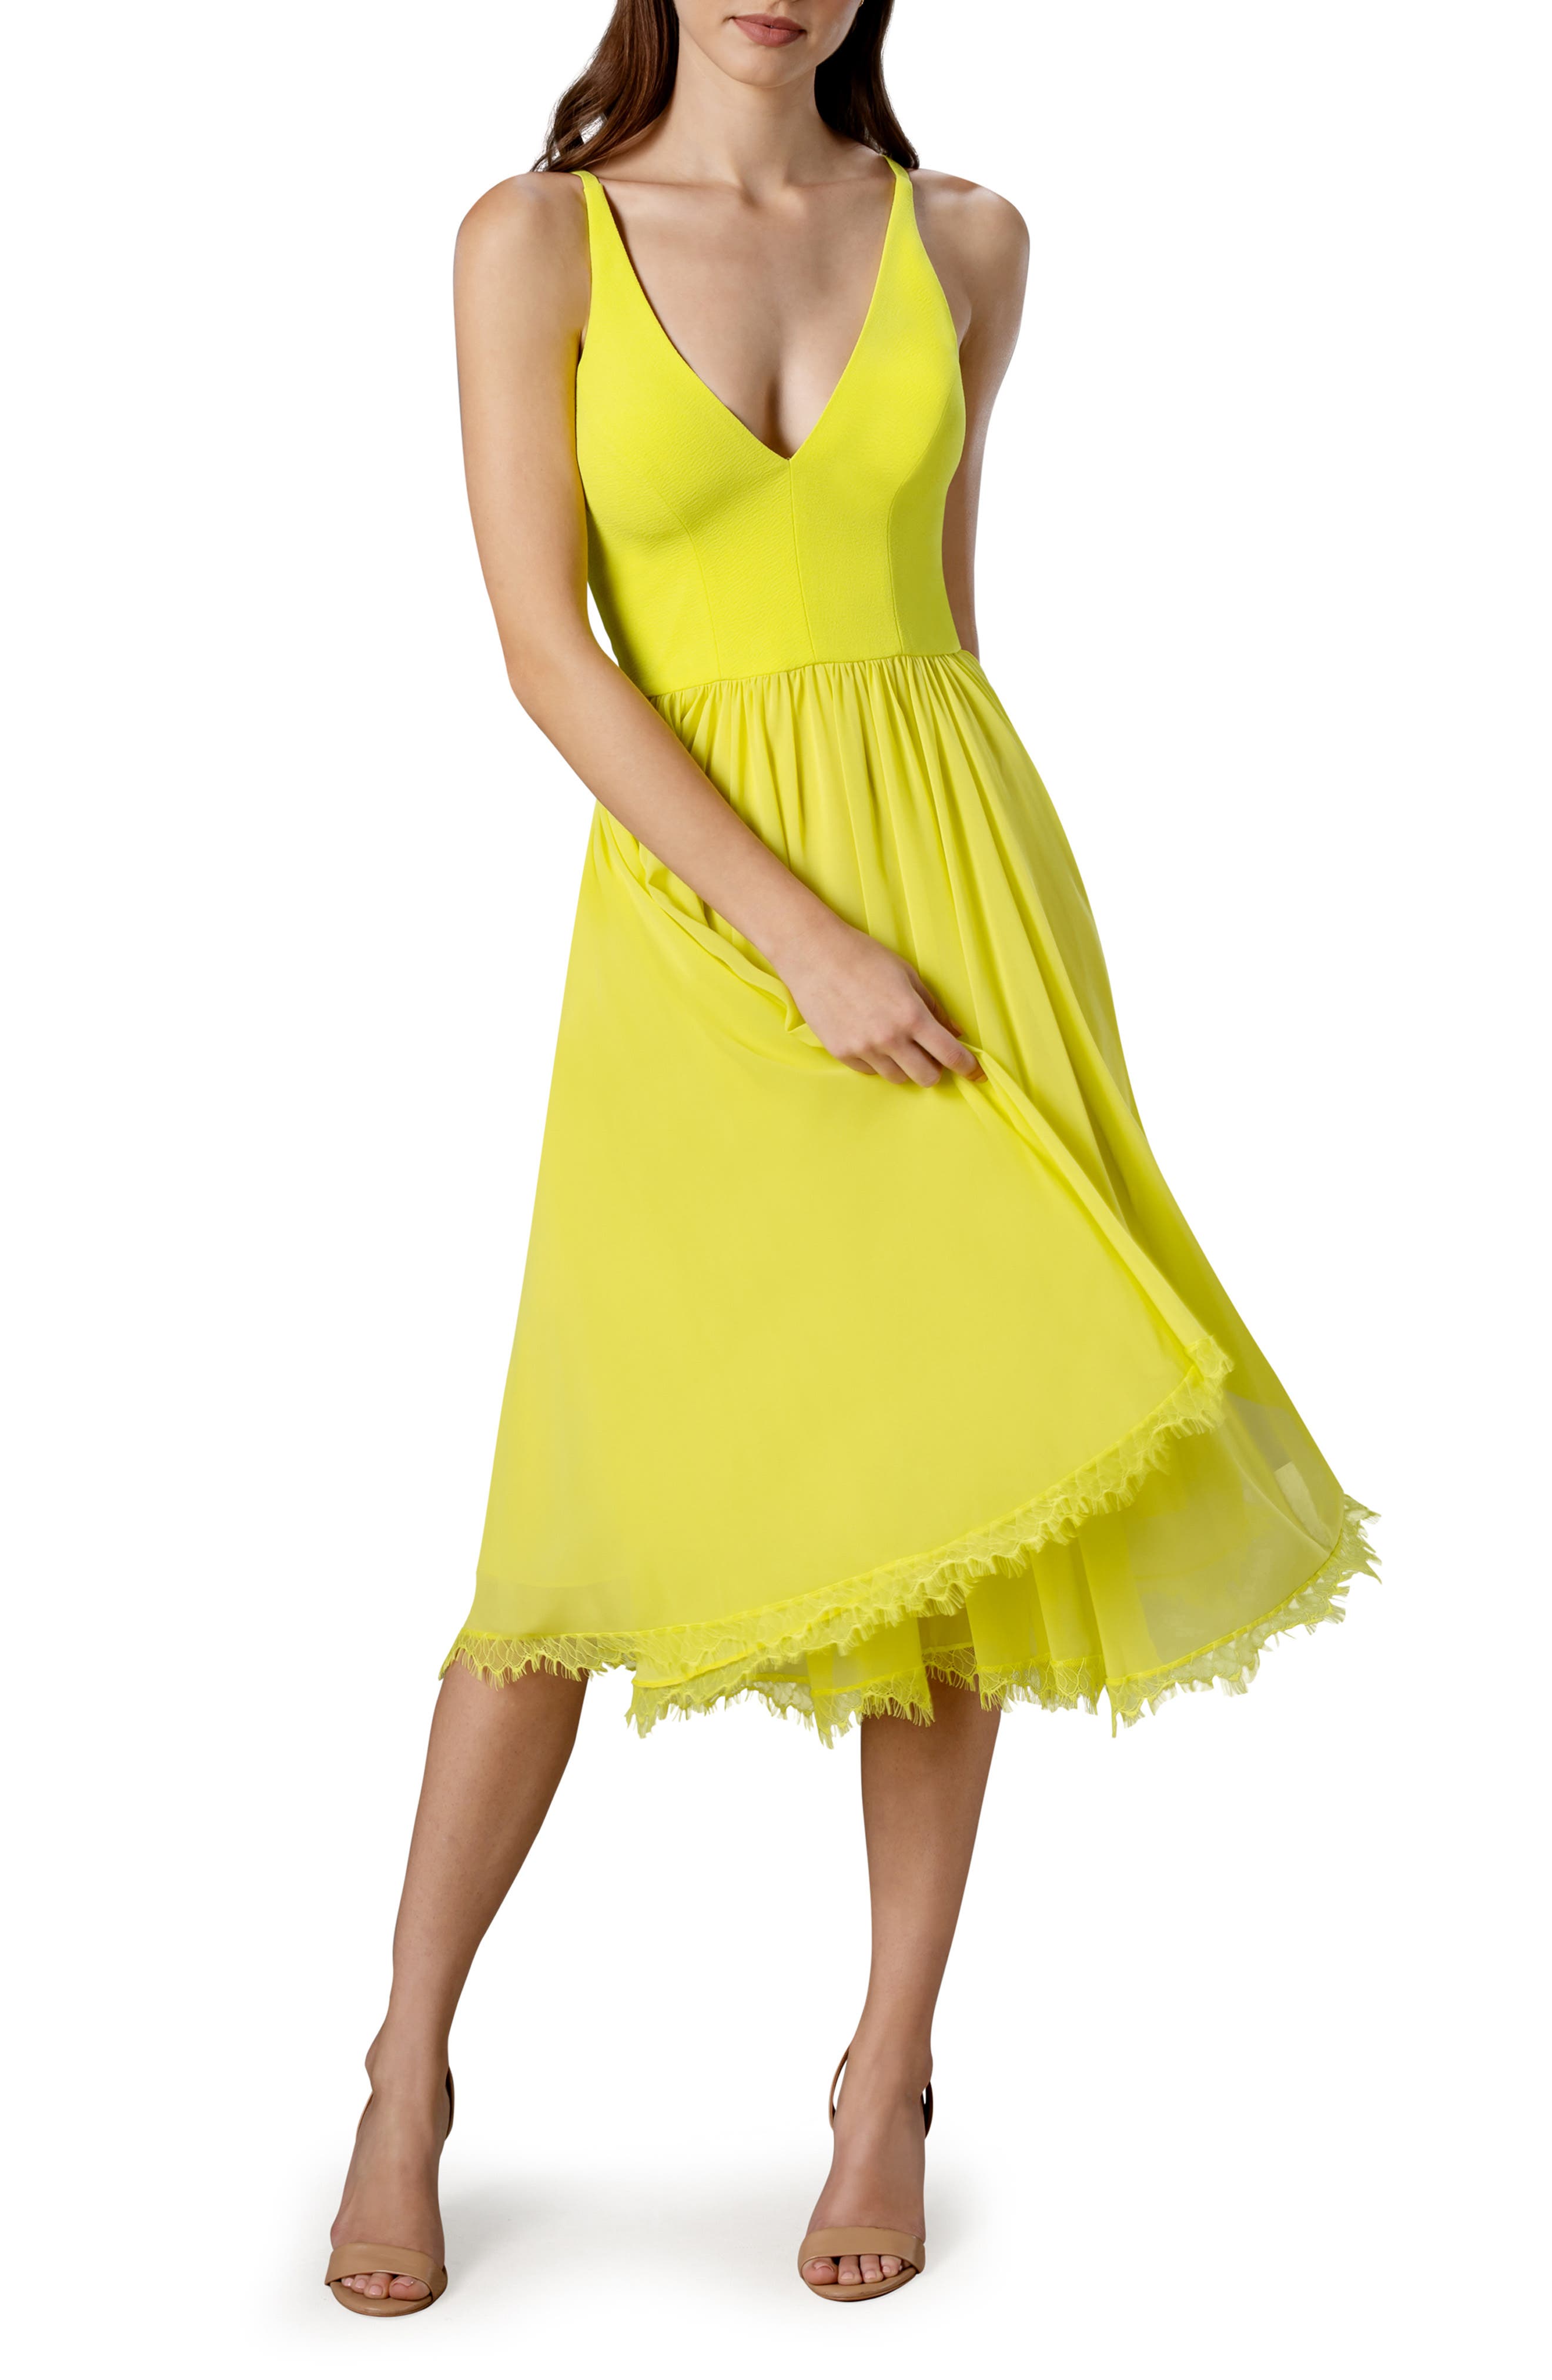 women yellow dress